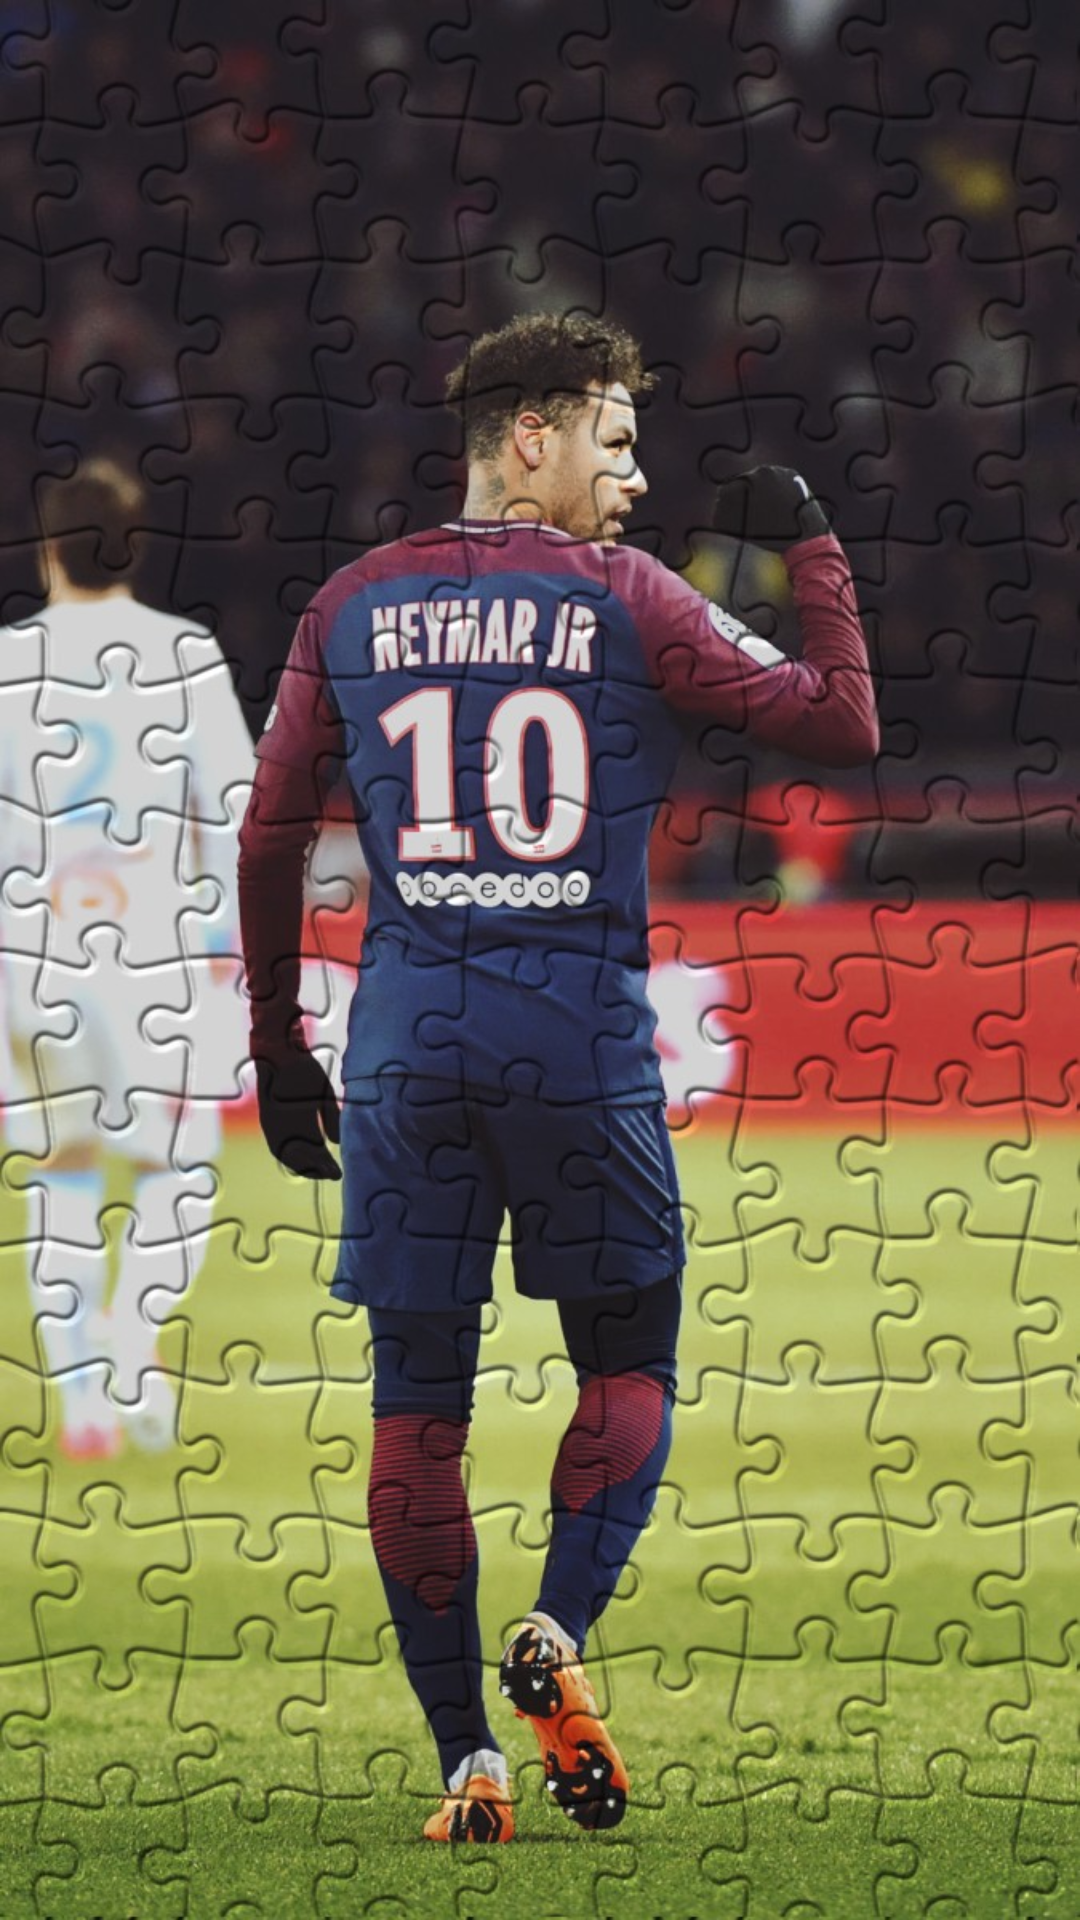 Screenshot 1 of Puzzle Neymar 1.0